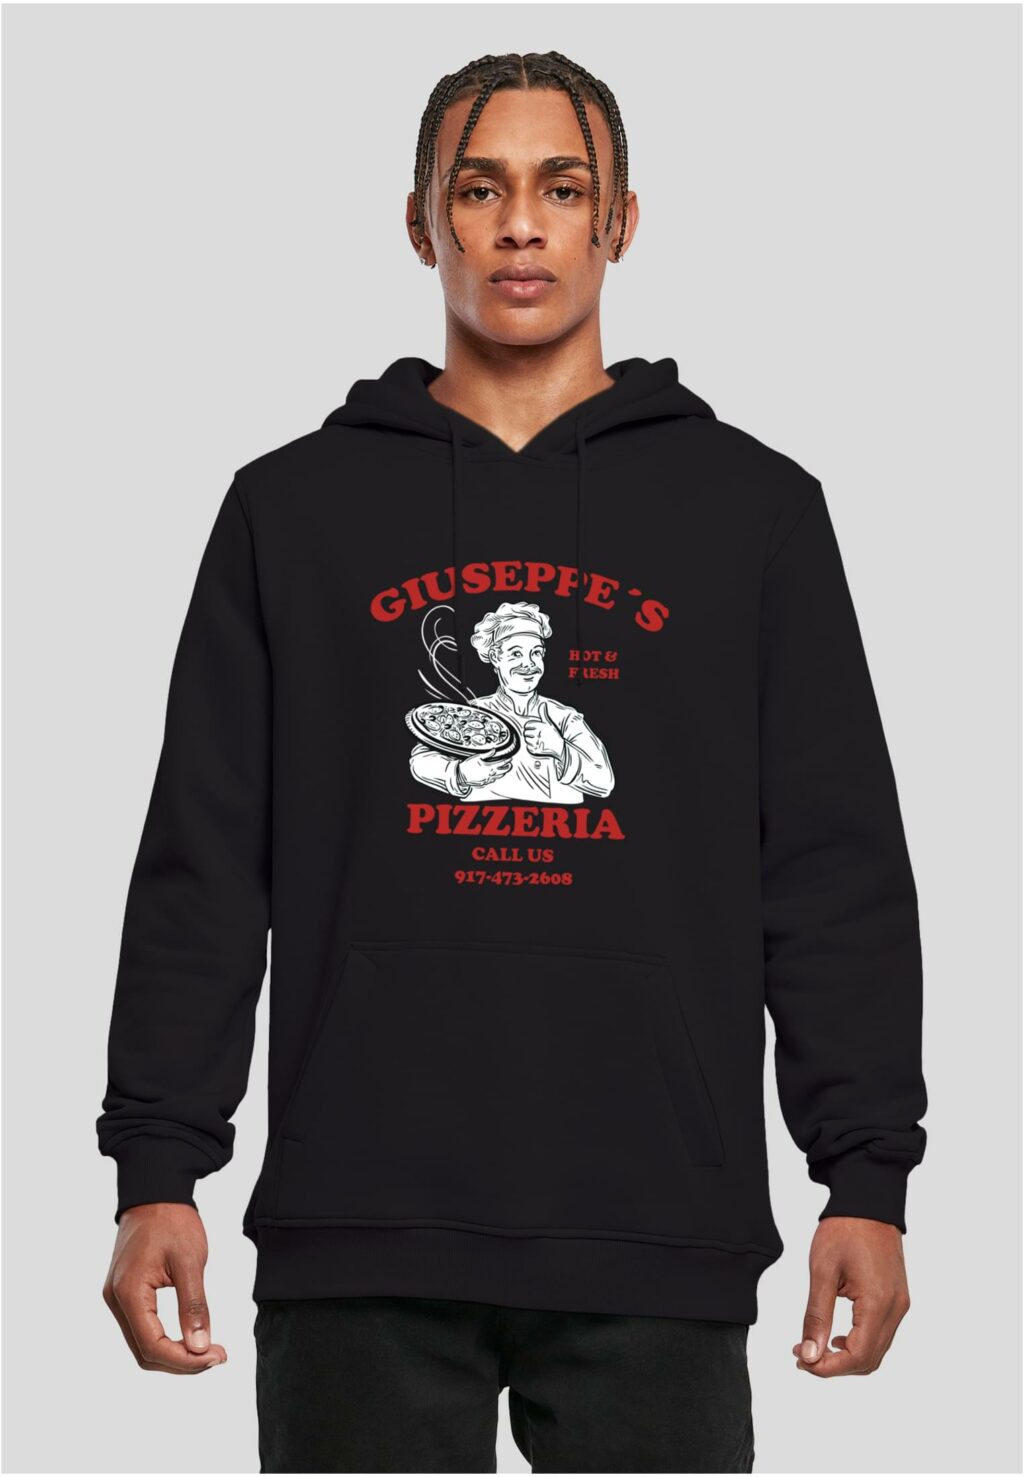 Giuseppe's Pizzeria Hoody black MT2881